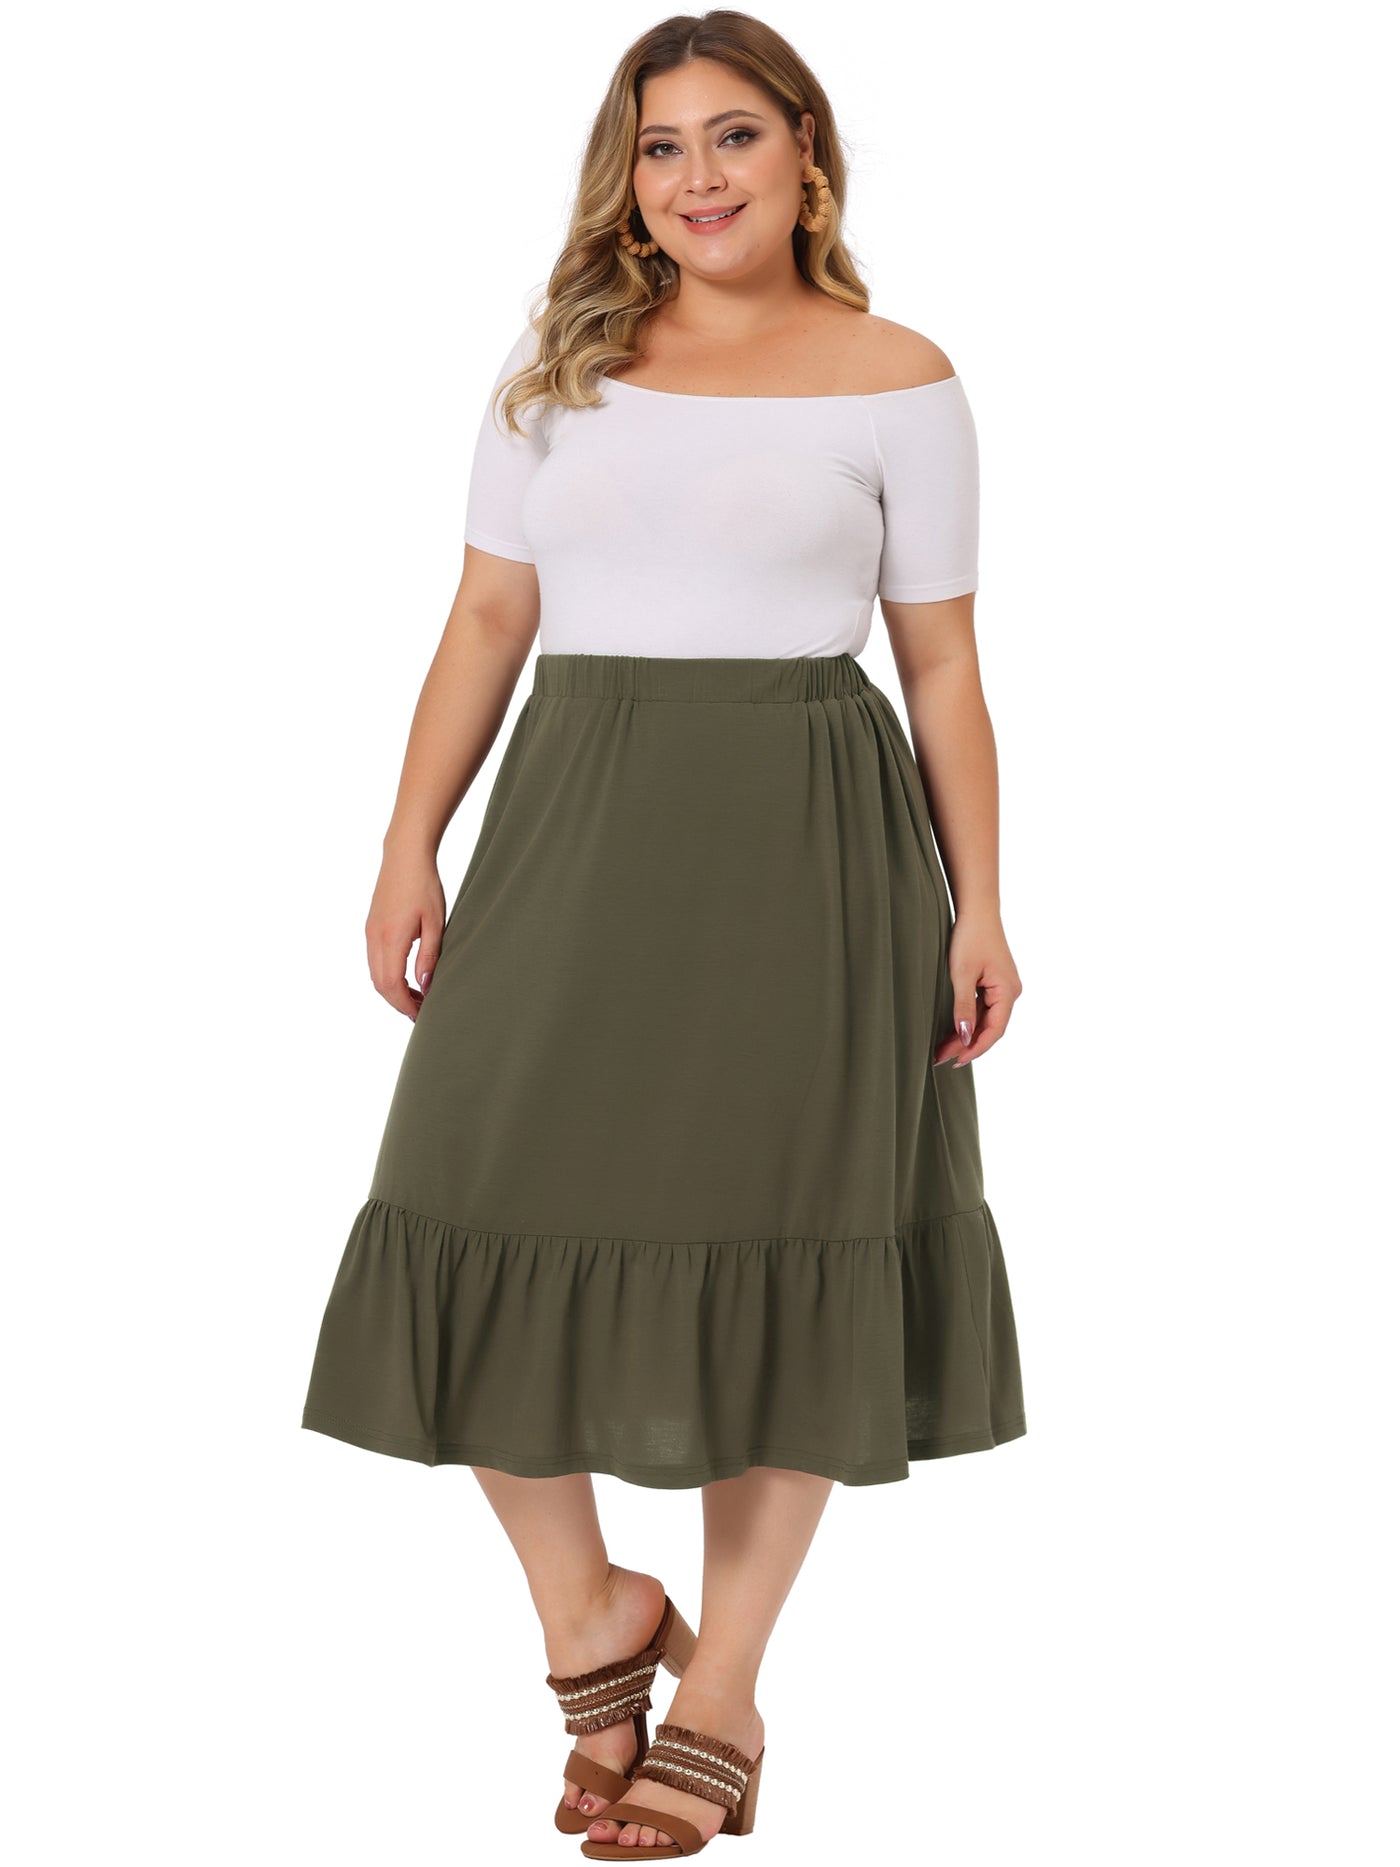 Bublédon Plus Size Half Ruffle Skirts for Women Elastic Waist Swing Casual Midi Vintage Underskirt